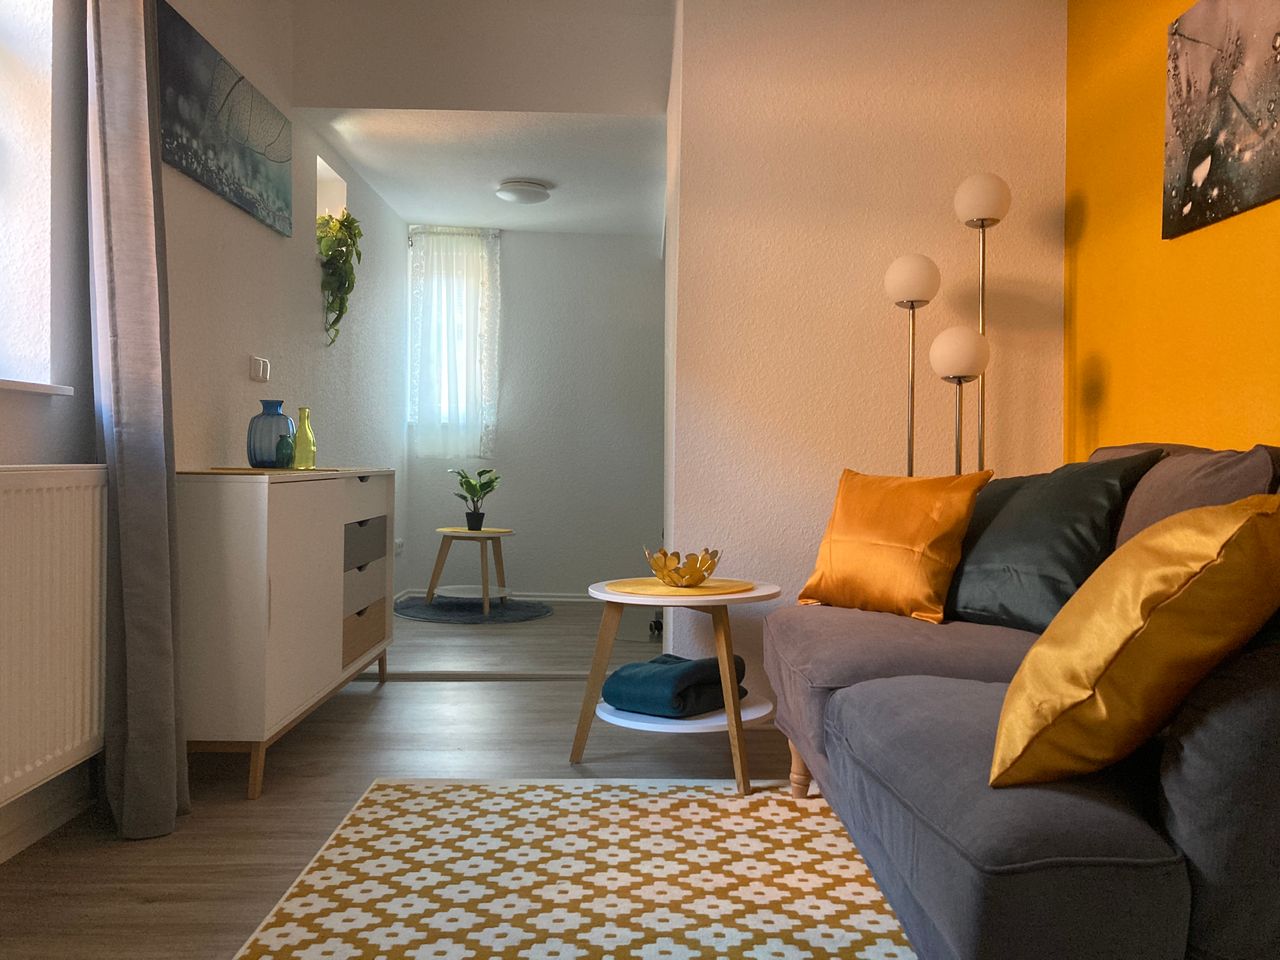 Cozy 2-room flat, well connected, in Frankfurt's green suburbs